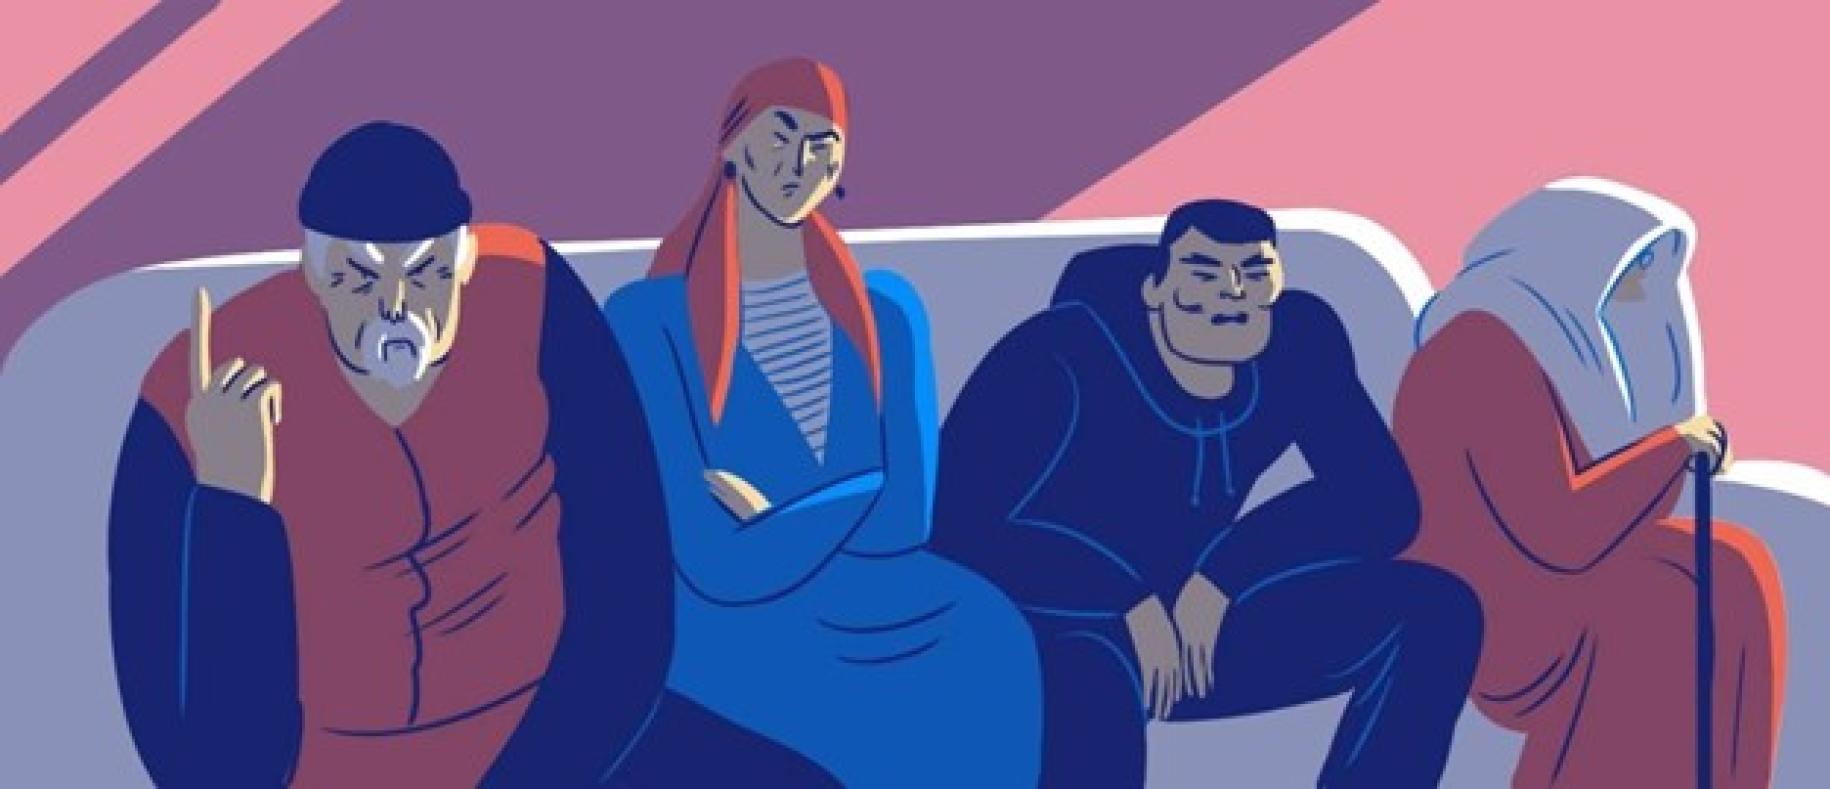 Иллюстрация: четверо человек сидят на диване и зло смотрят на читателя 